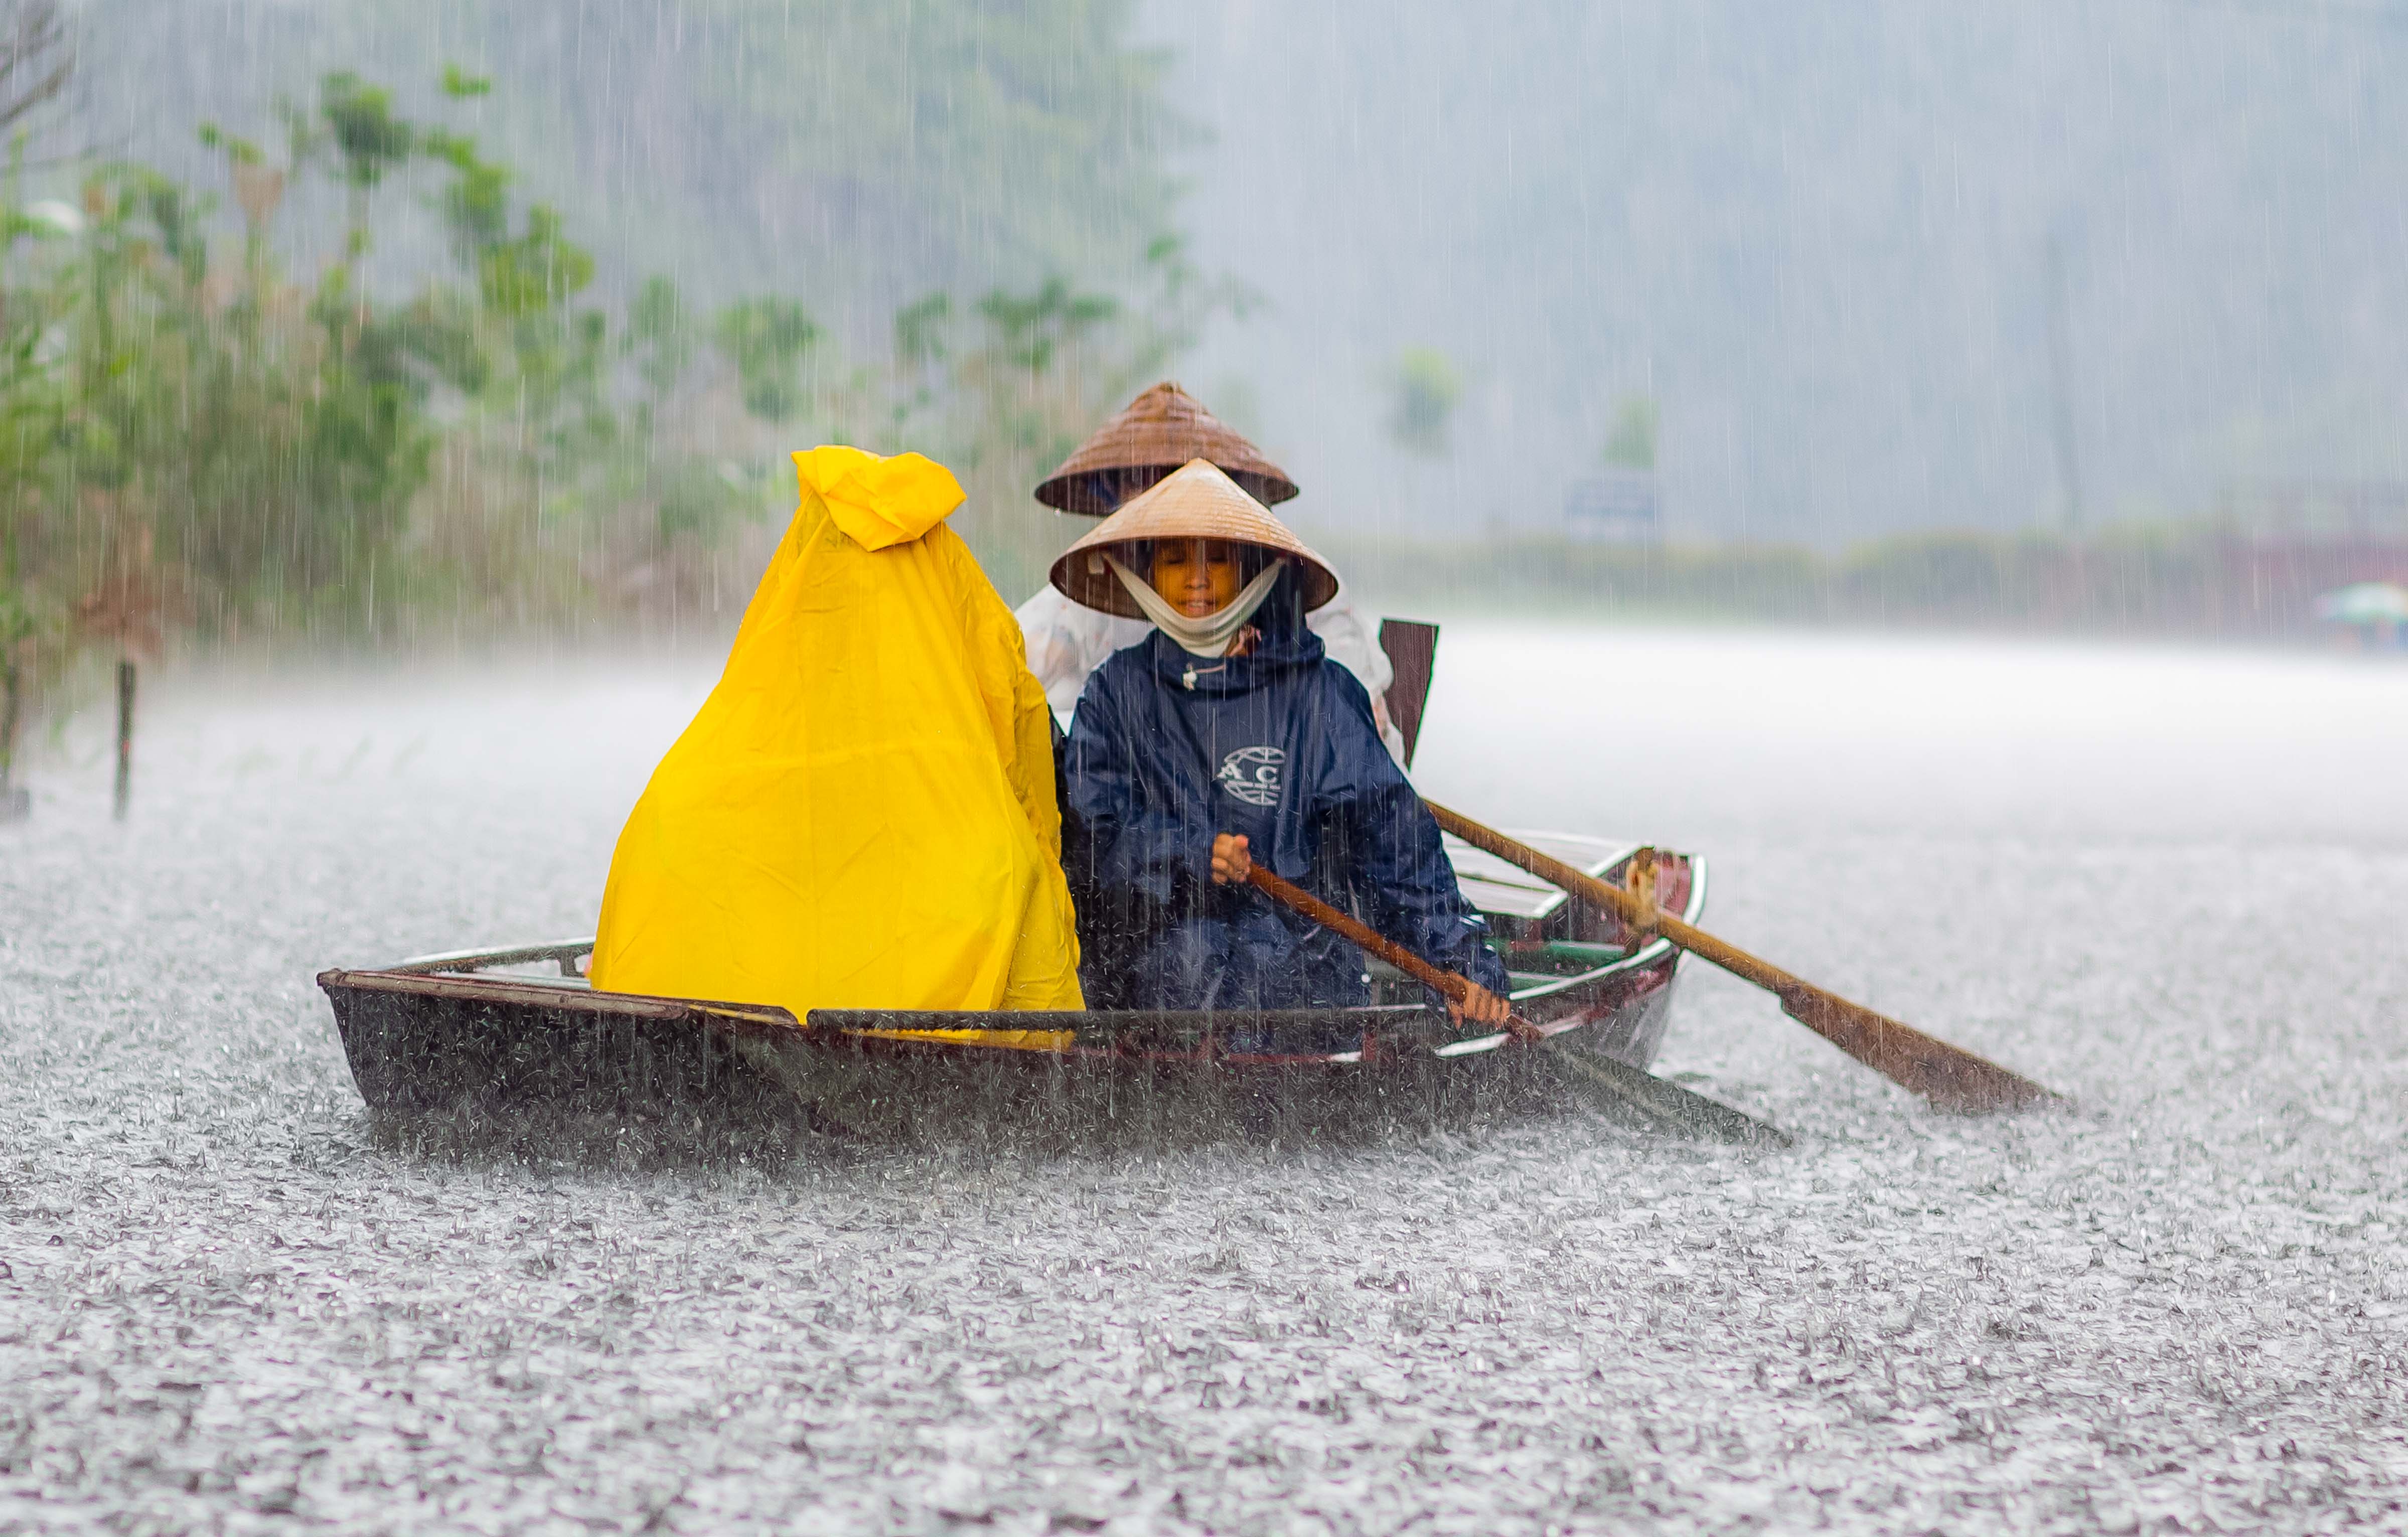 Vietnam, Ninh Binh Prov, Paddlers In The Rain, 2011, IMG 1208r2